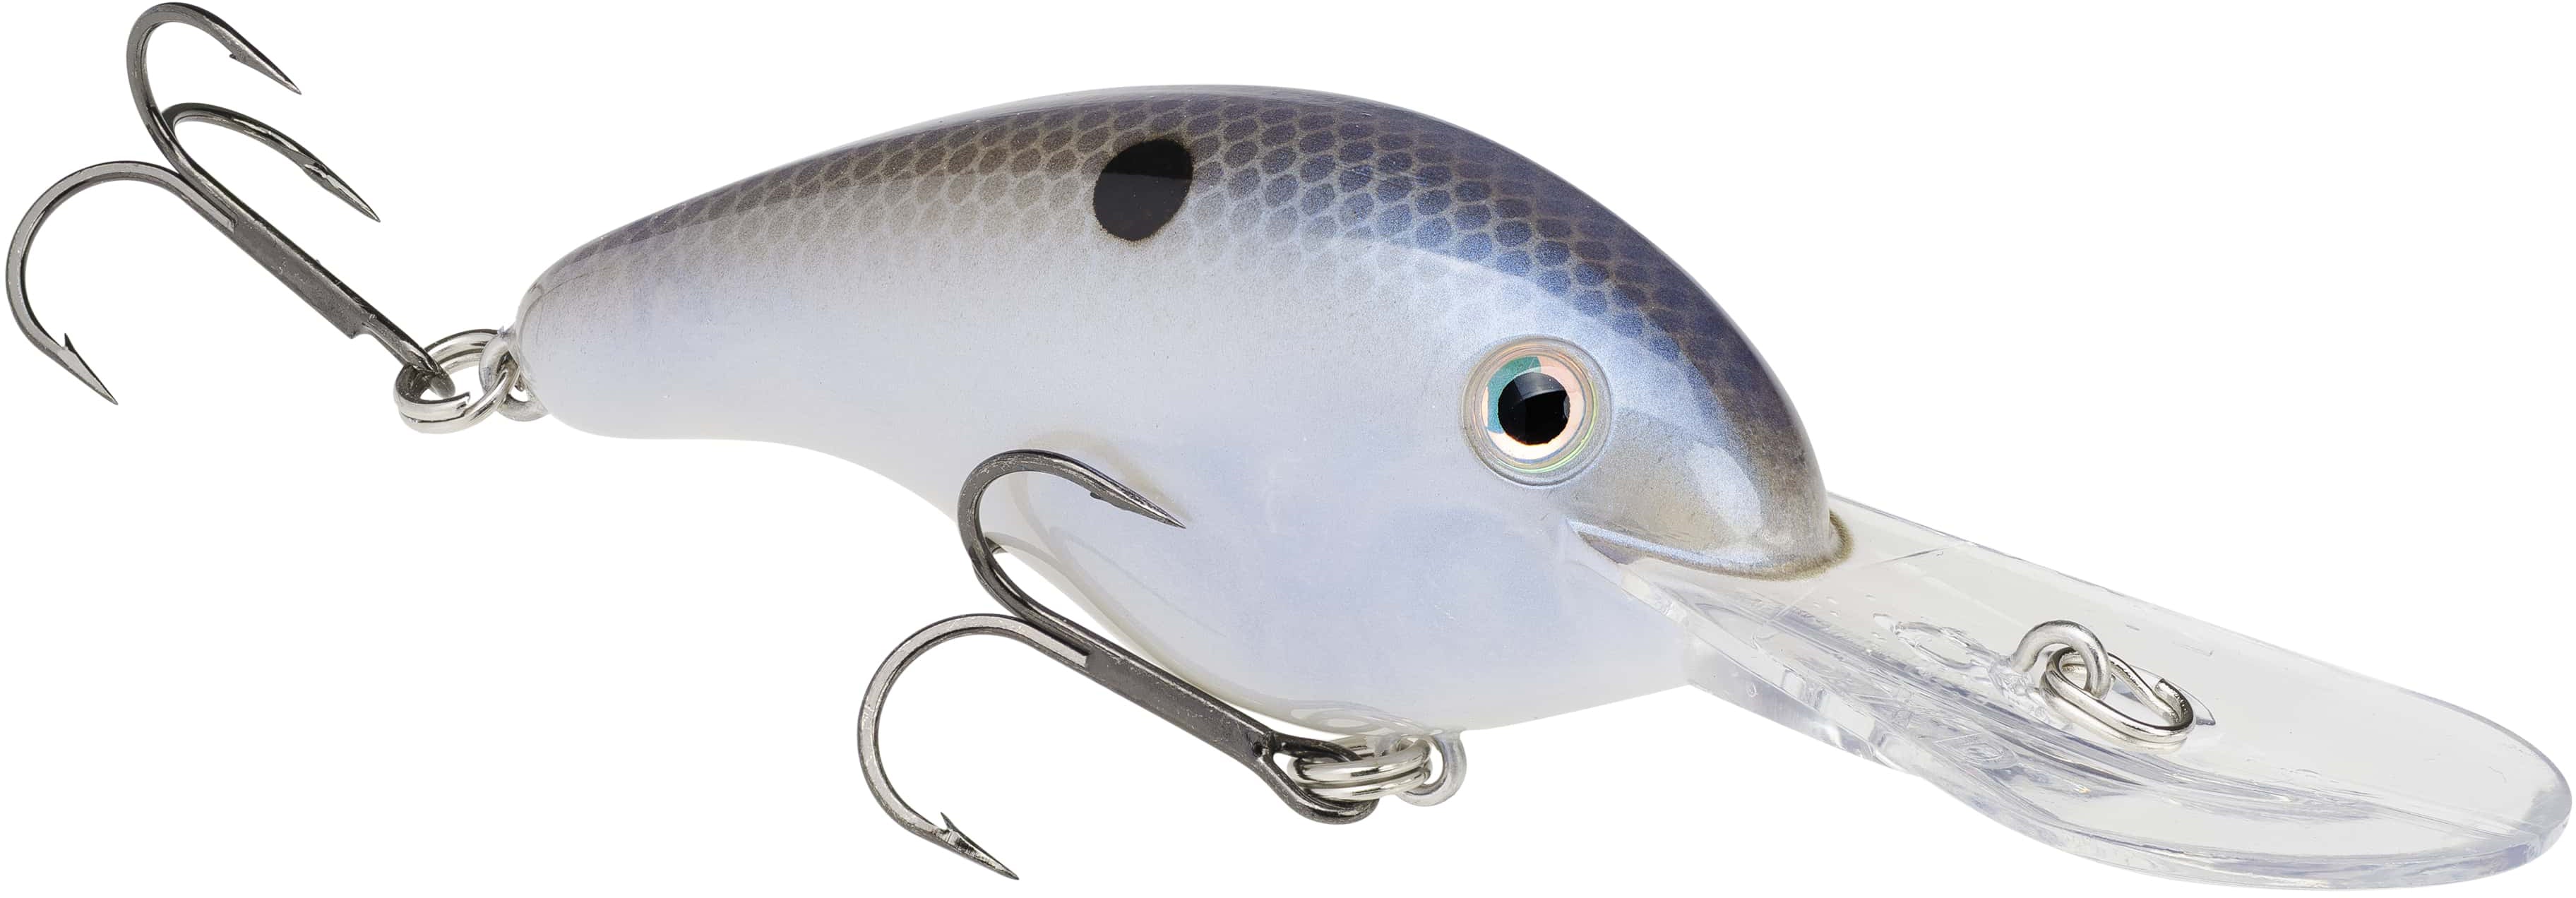 PLAT/daiwa ddigital scale 25 gray/lure-Fishing Tackle Store-en